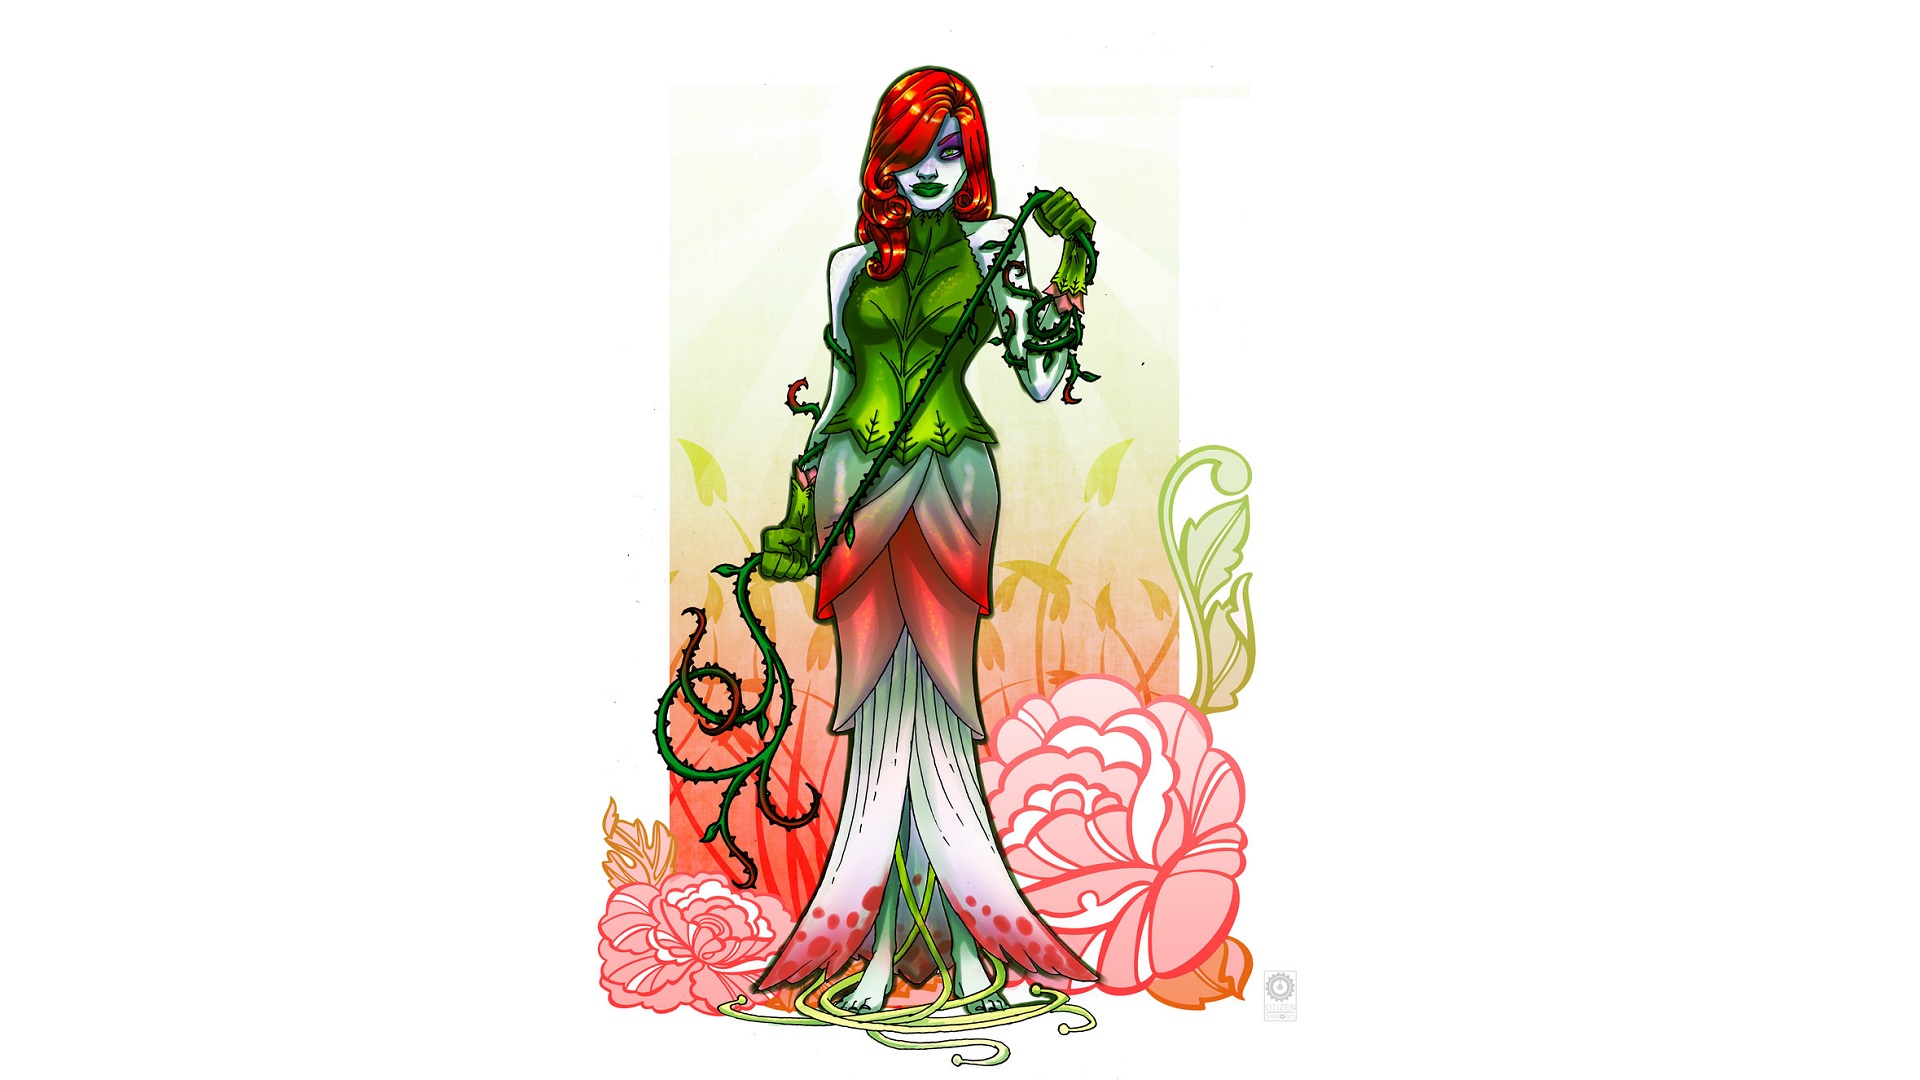 Comics Poison Ivy 1920x1080